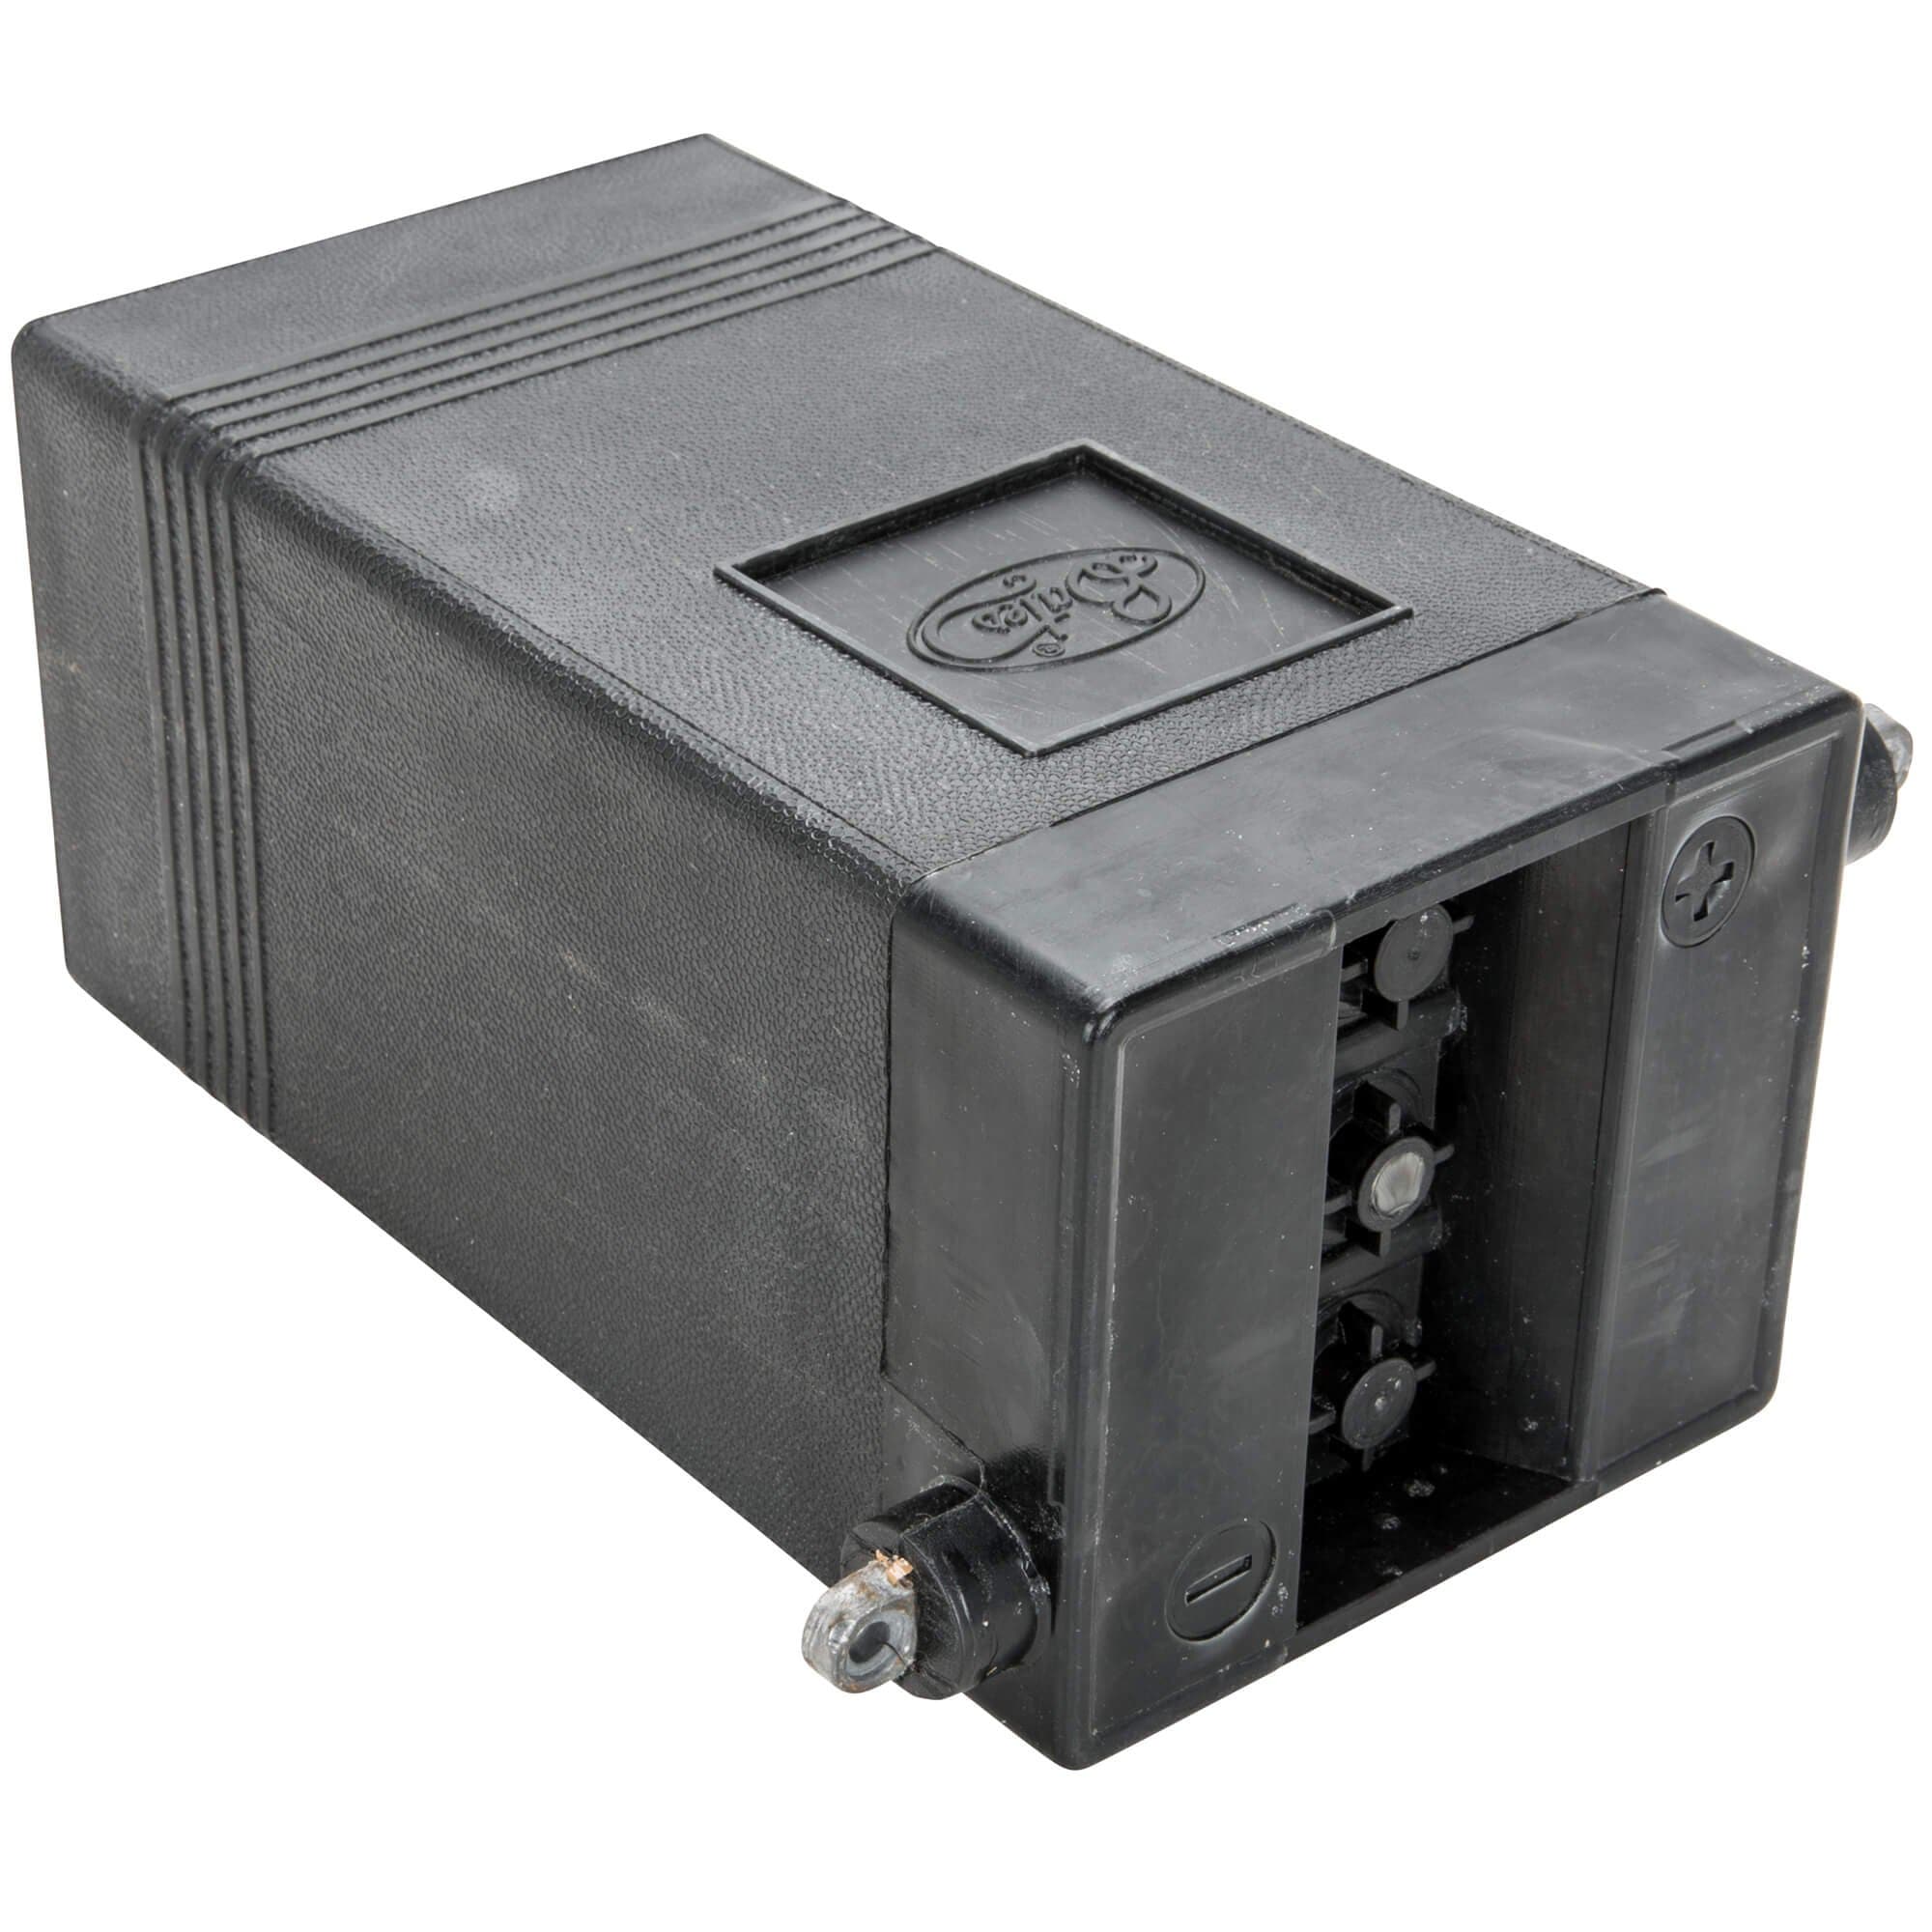 Bates BattBoy Battery Box for Modern Gel or Li-Ion Batteries fits